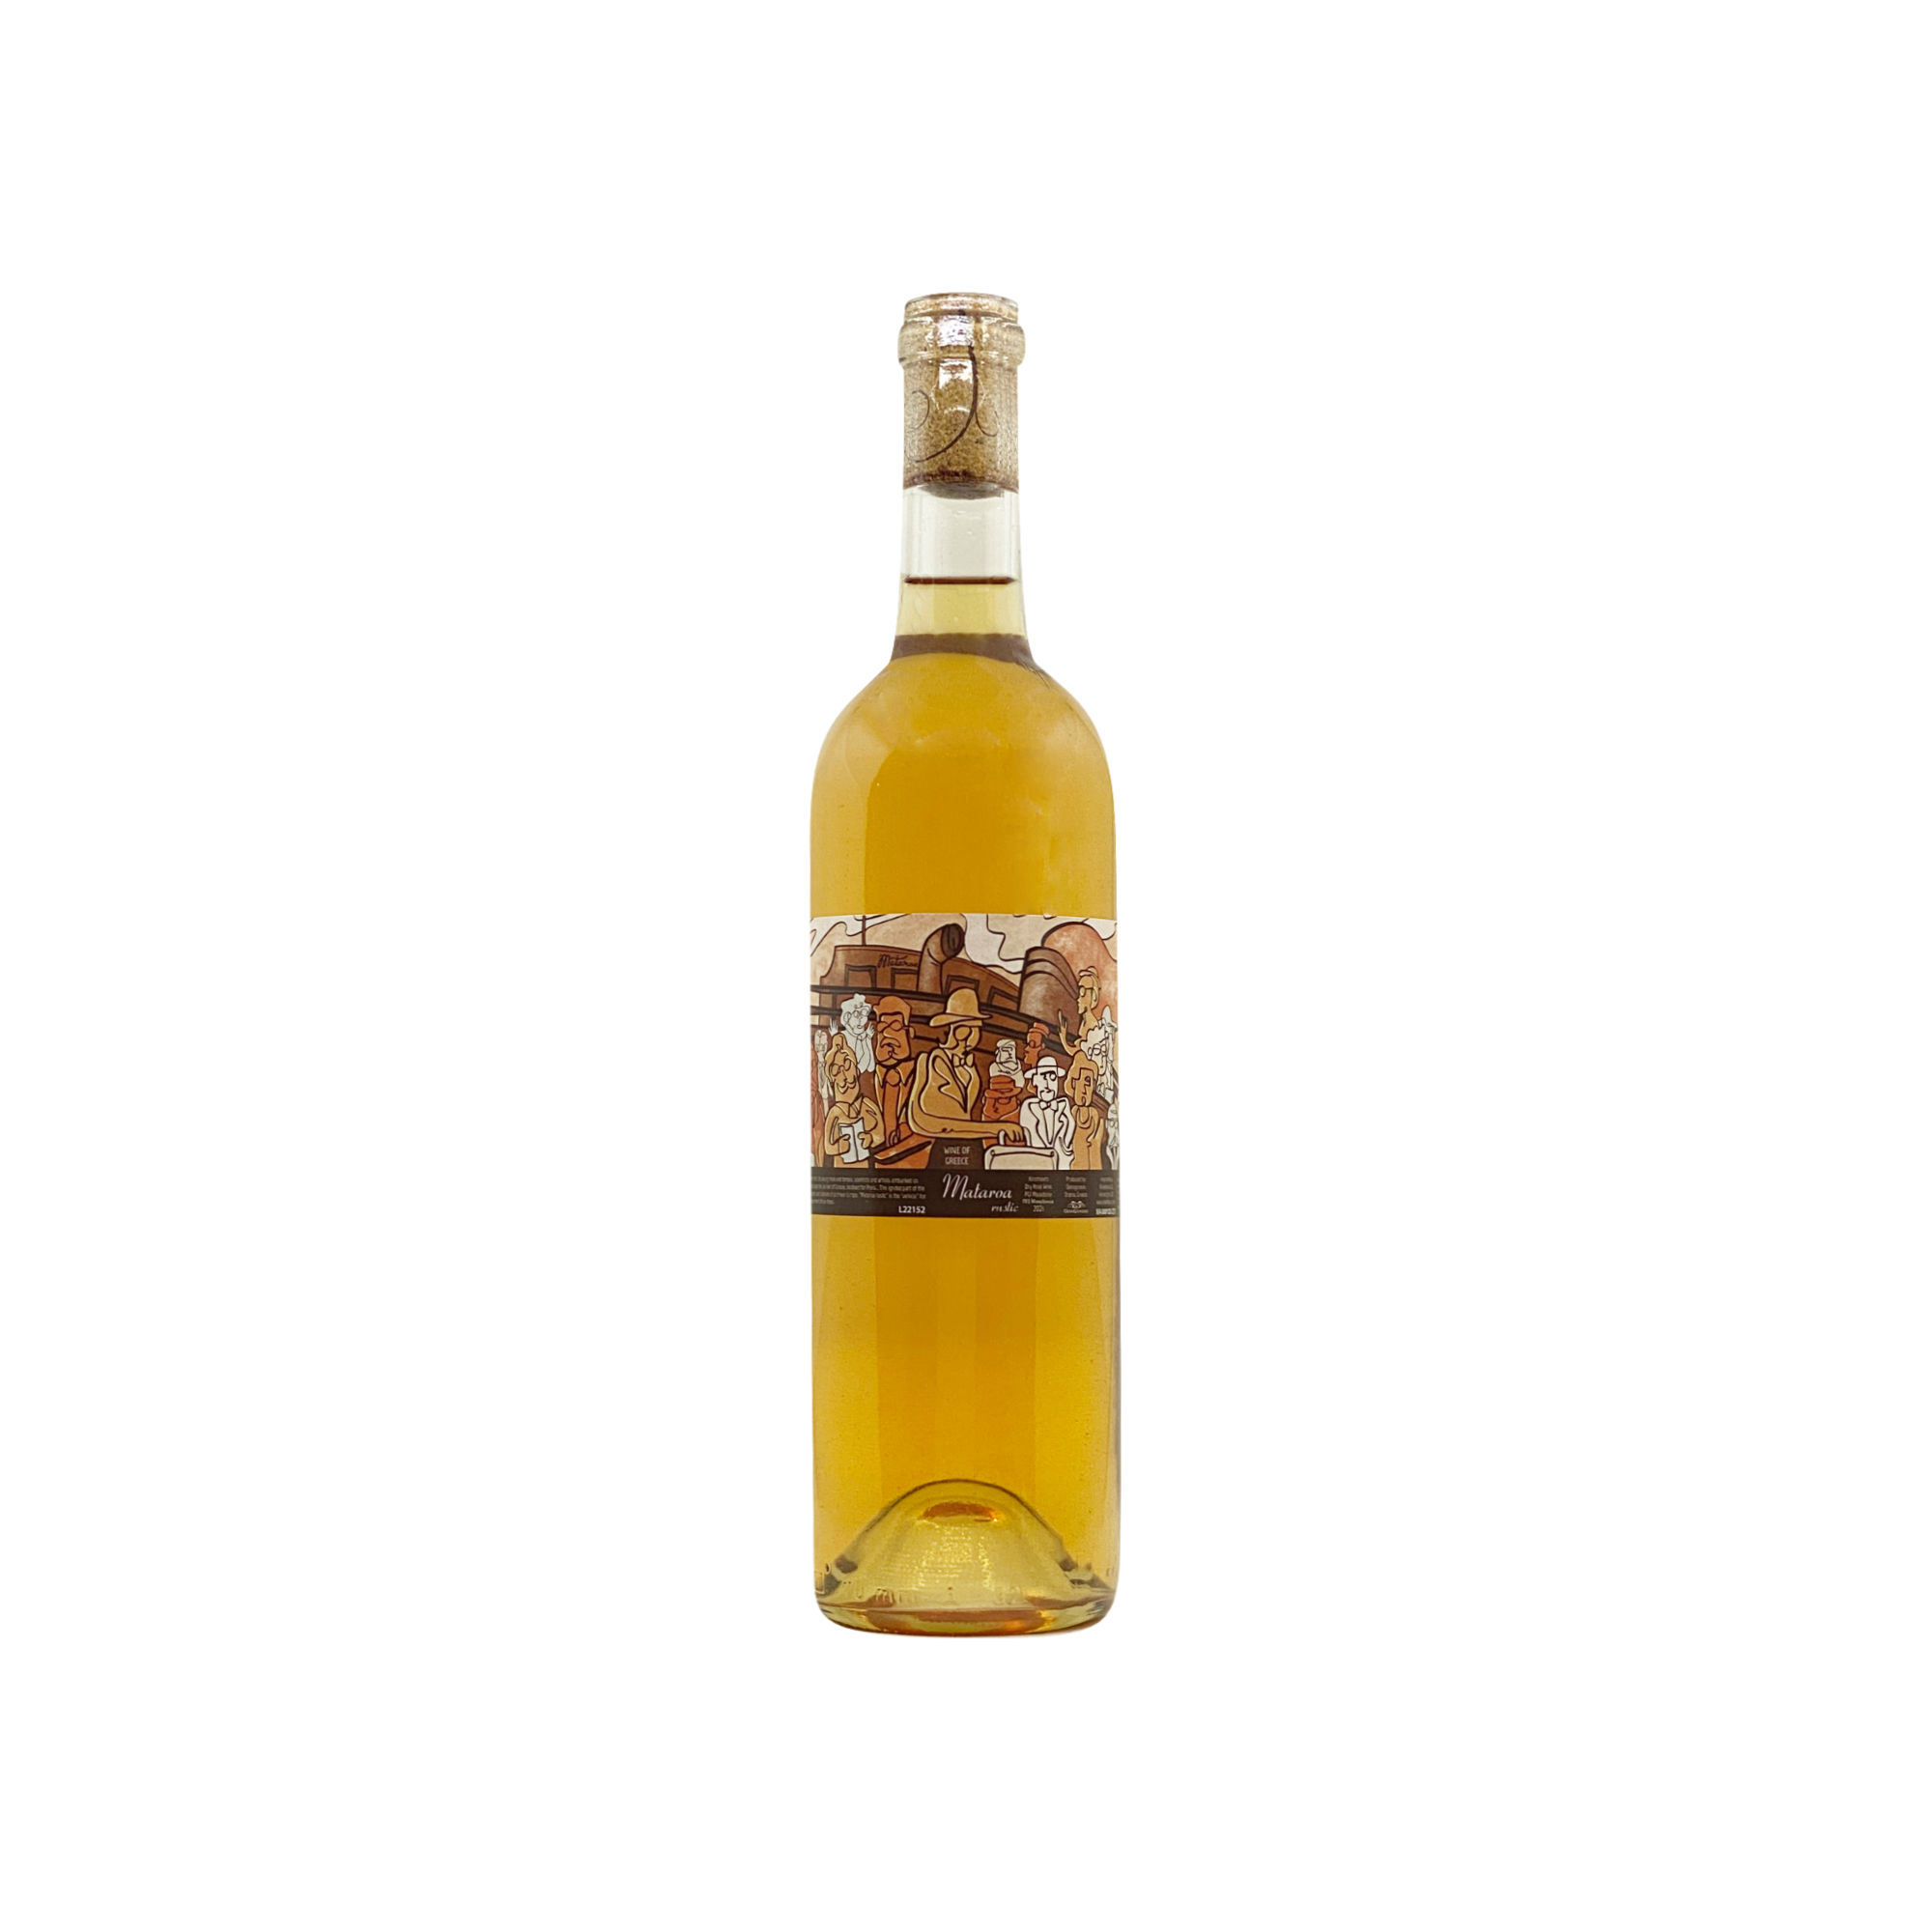 Mataroa rustic - Oenogenesis - Drama, Greece - Xinomavro - Natural rosé Greek wine - Eklektikon